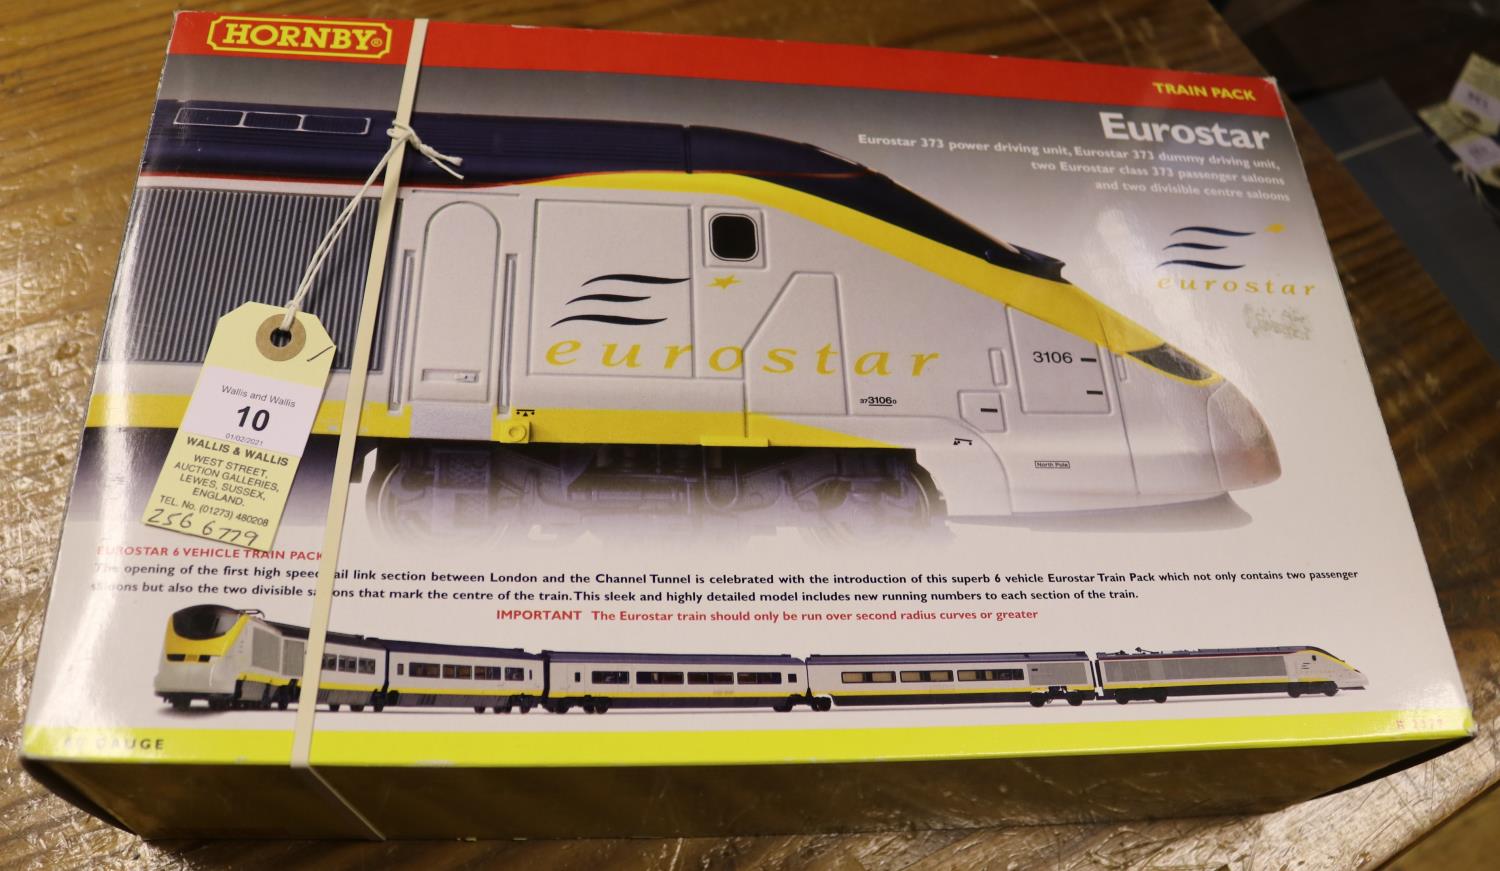 Hornby Railways Eurostar Train Pack. R2379. Comprising 373 power driving unit, dummy driving unit